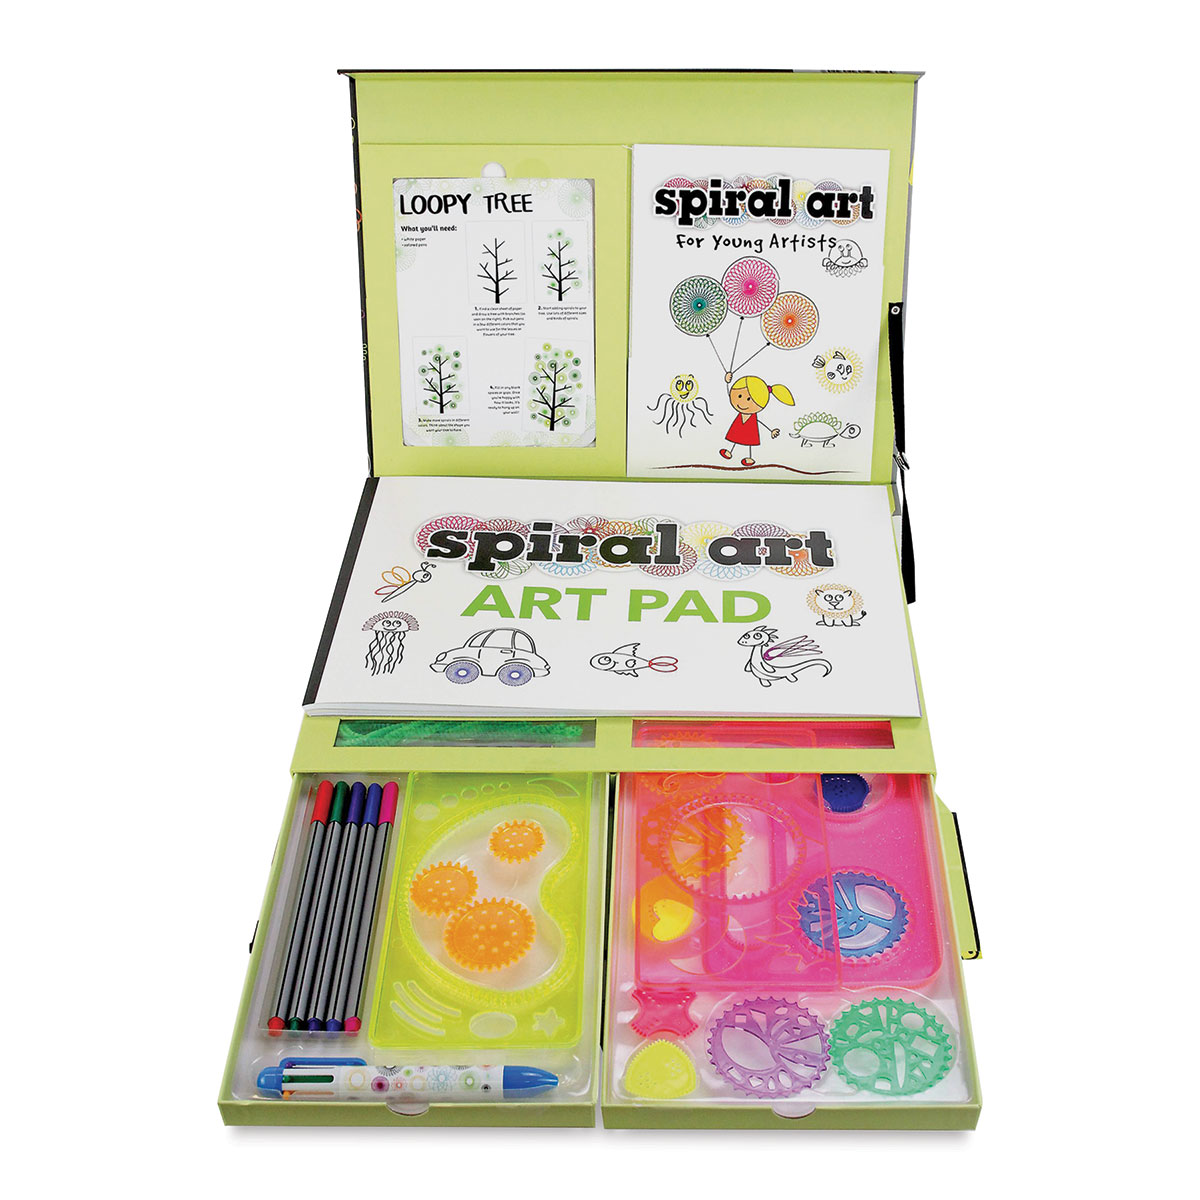 Spiral Art Kit 